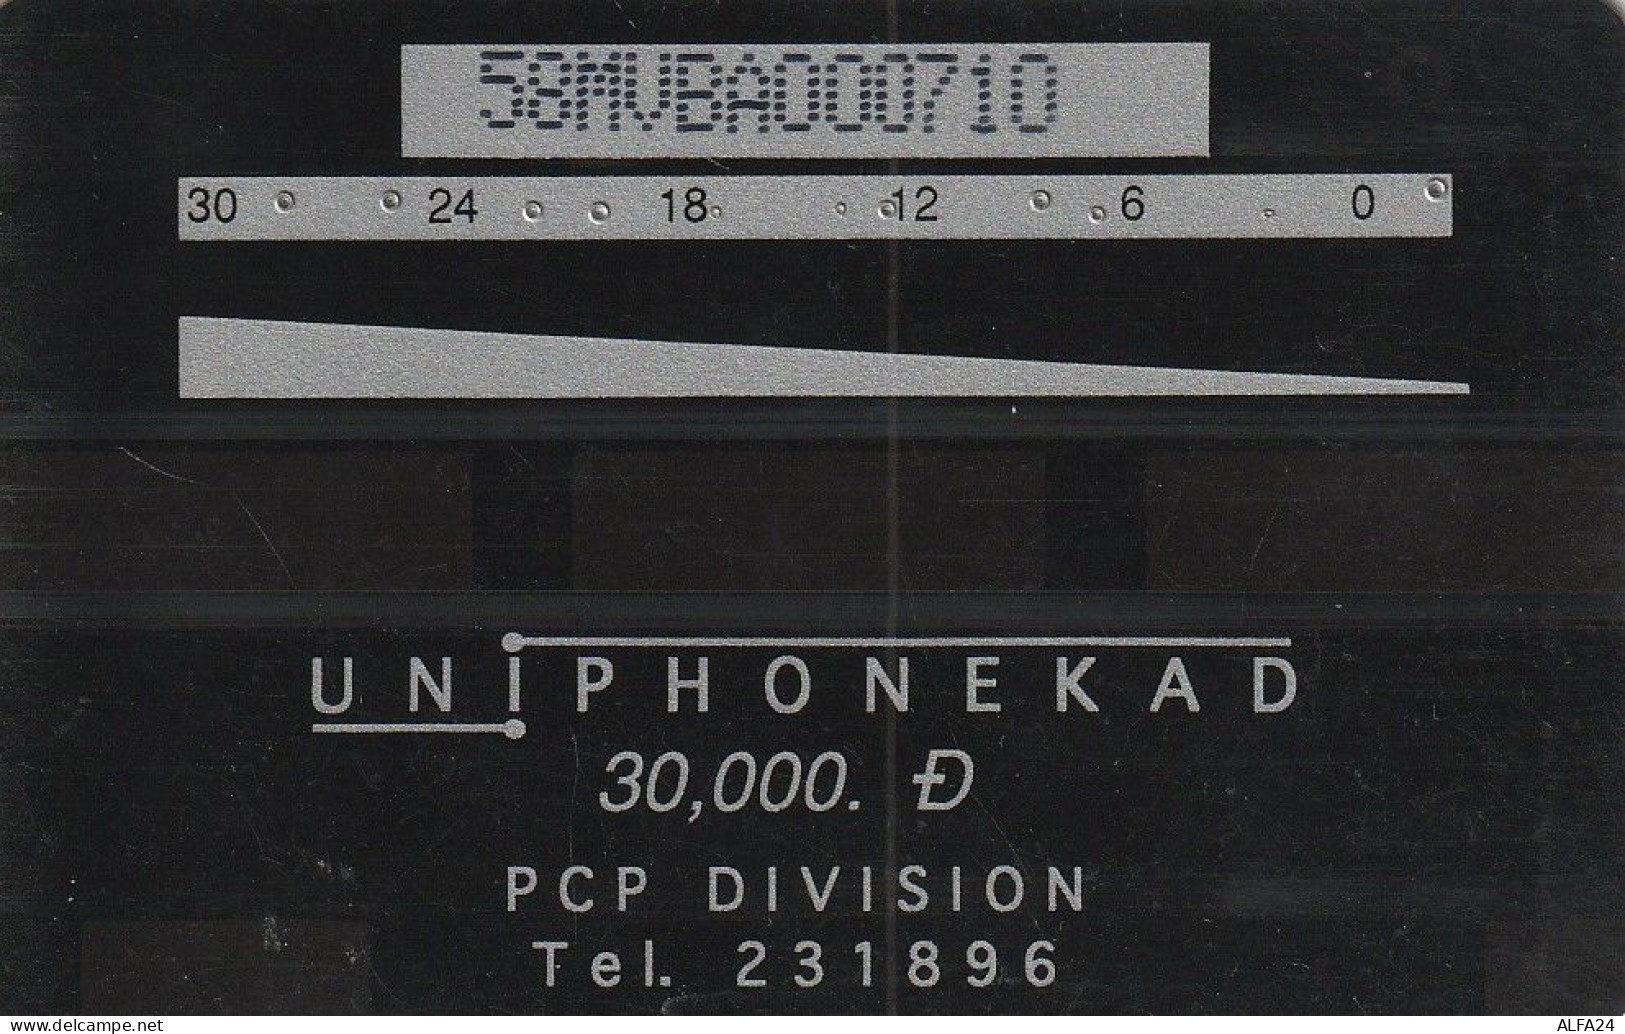 PHONE CARD VIETNAM  (E52.10.5 - Vietnam